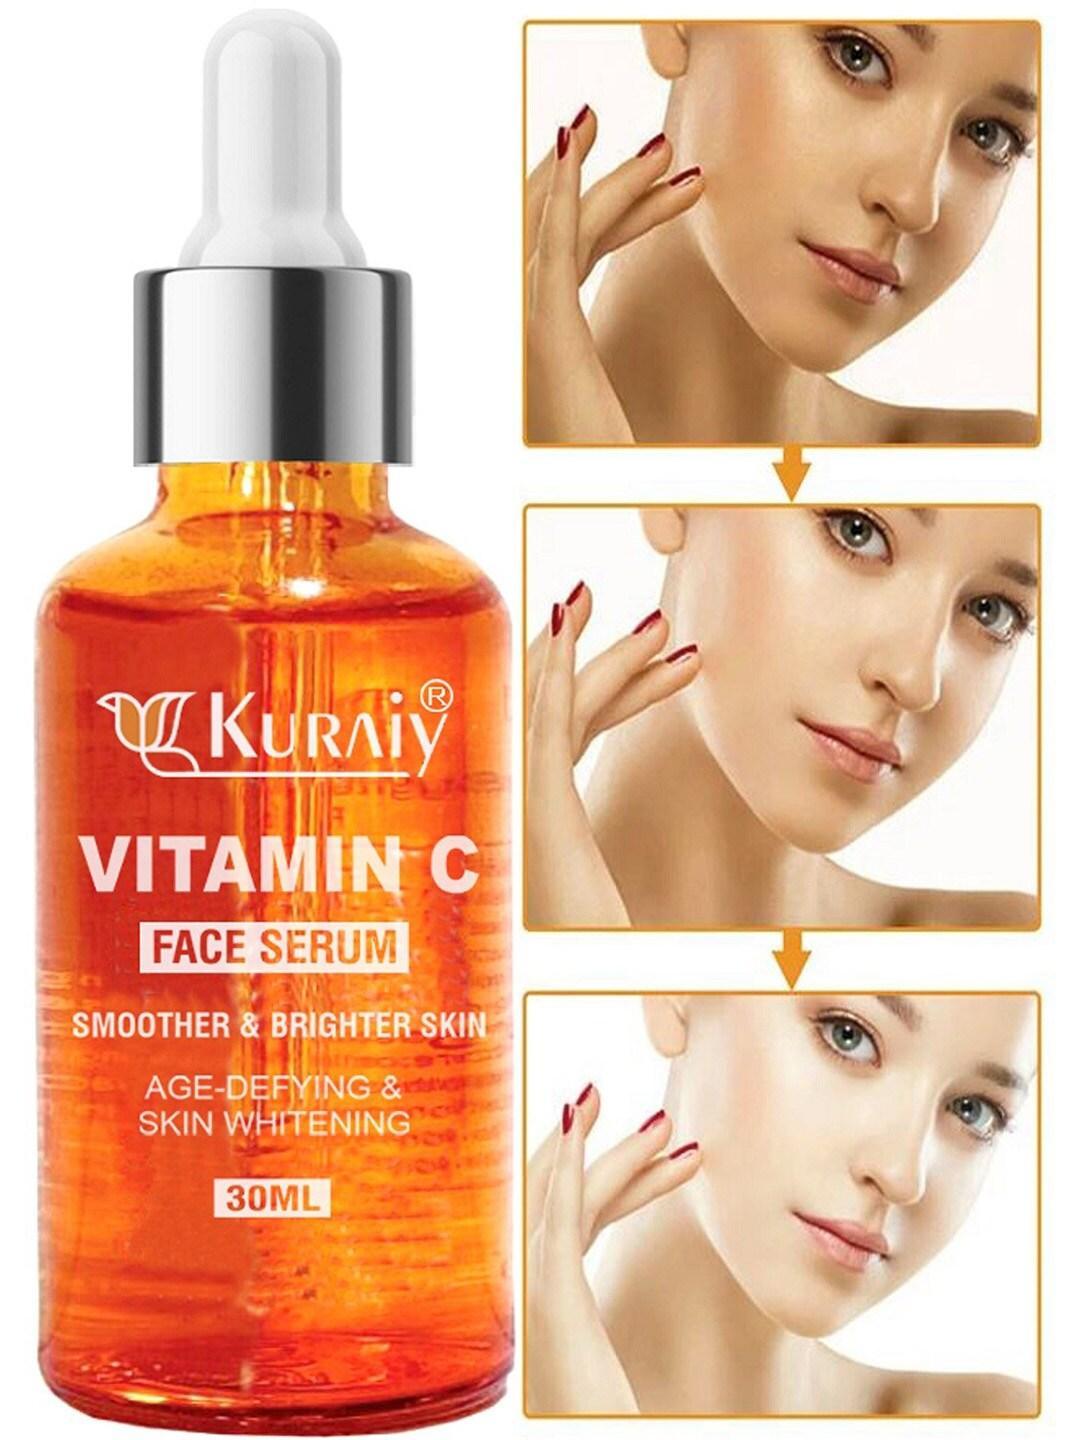 KURAIY Vitamin C Skin Face Serum - 30 ml